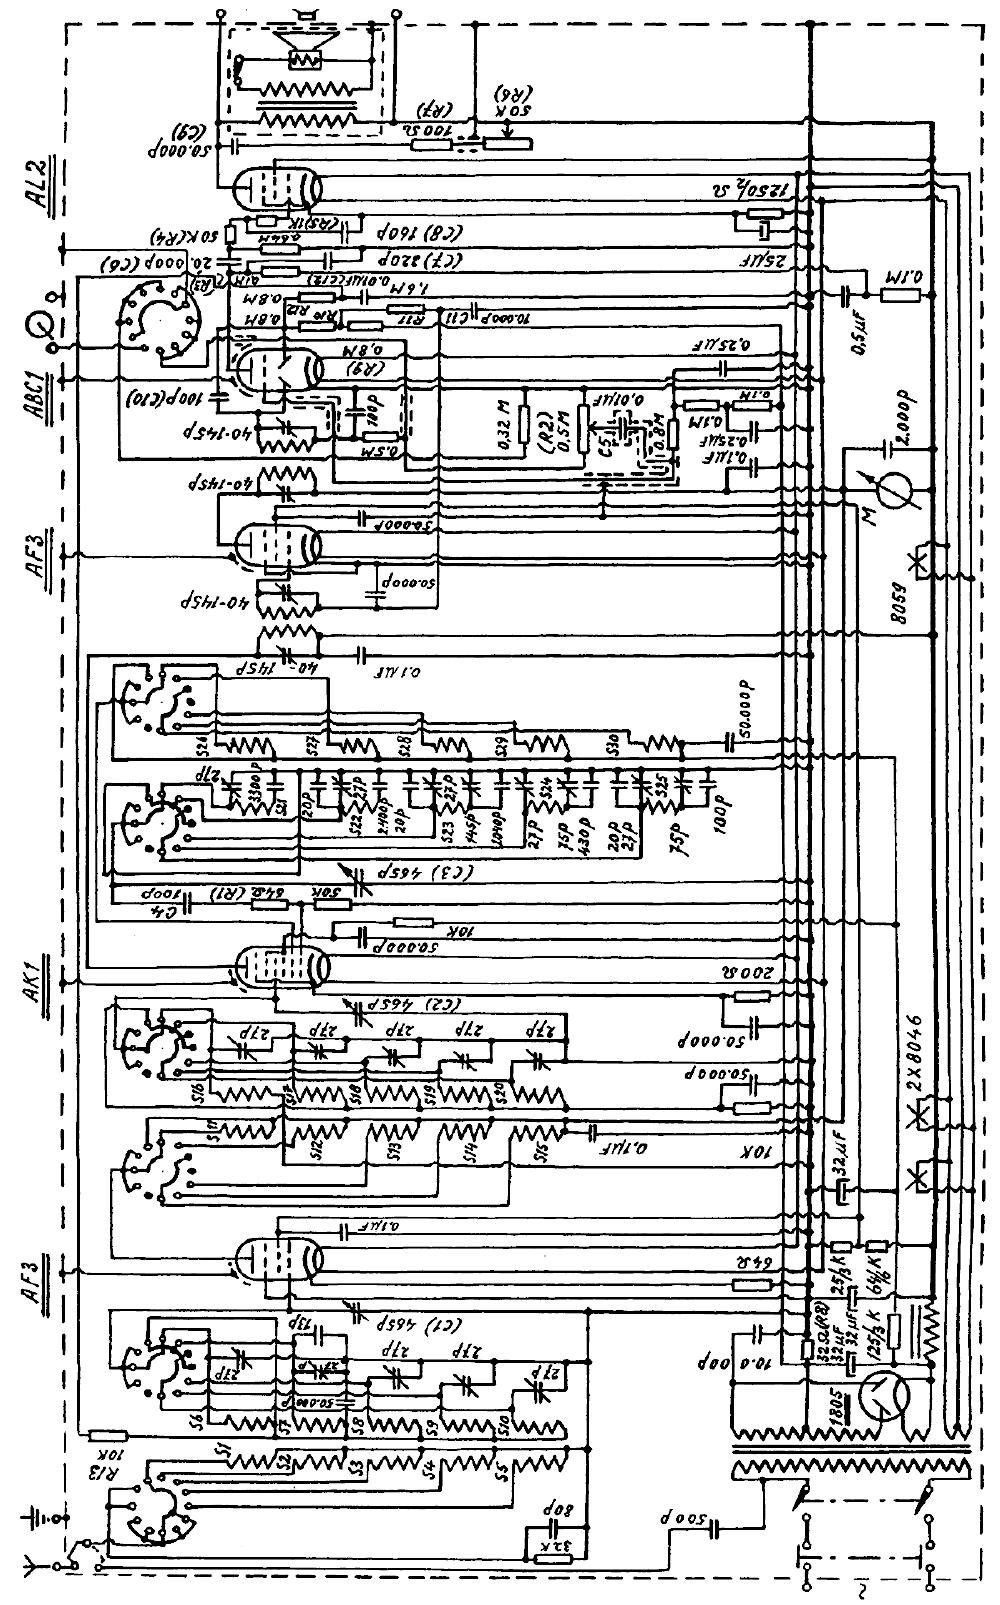 philips 335 a schematic